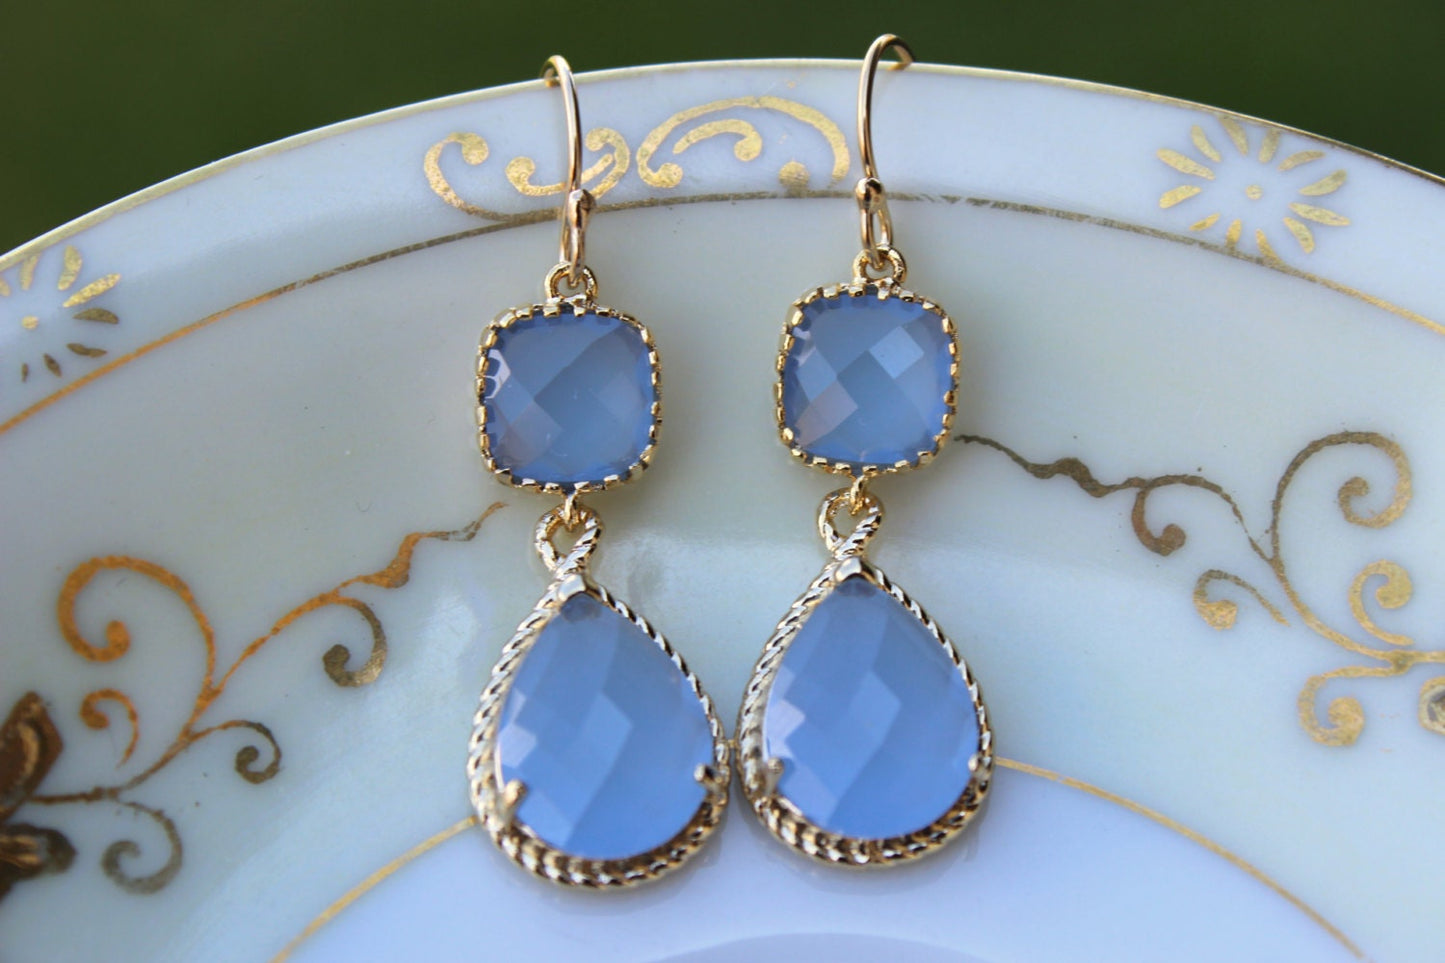 Periwinkle Earrings Gold Lavender Blue Two Tier Earrings Bridesmaid Earrings Wedding Earrings Bridesmaid Jewelry Gift Wedding Jewelry